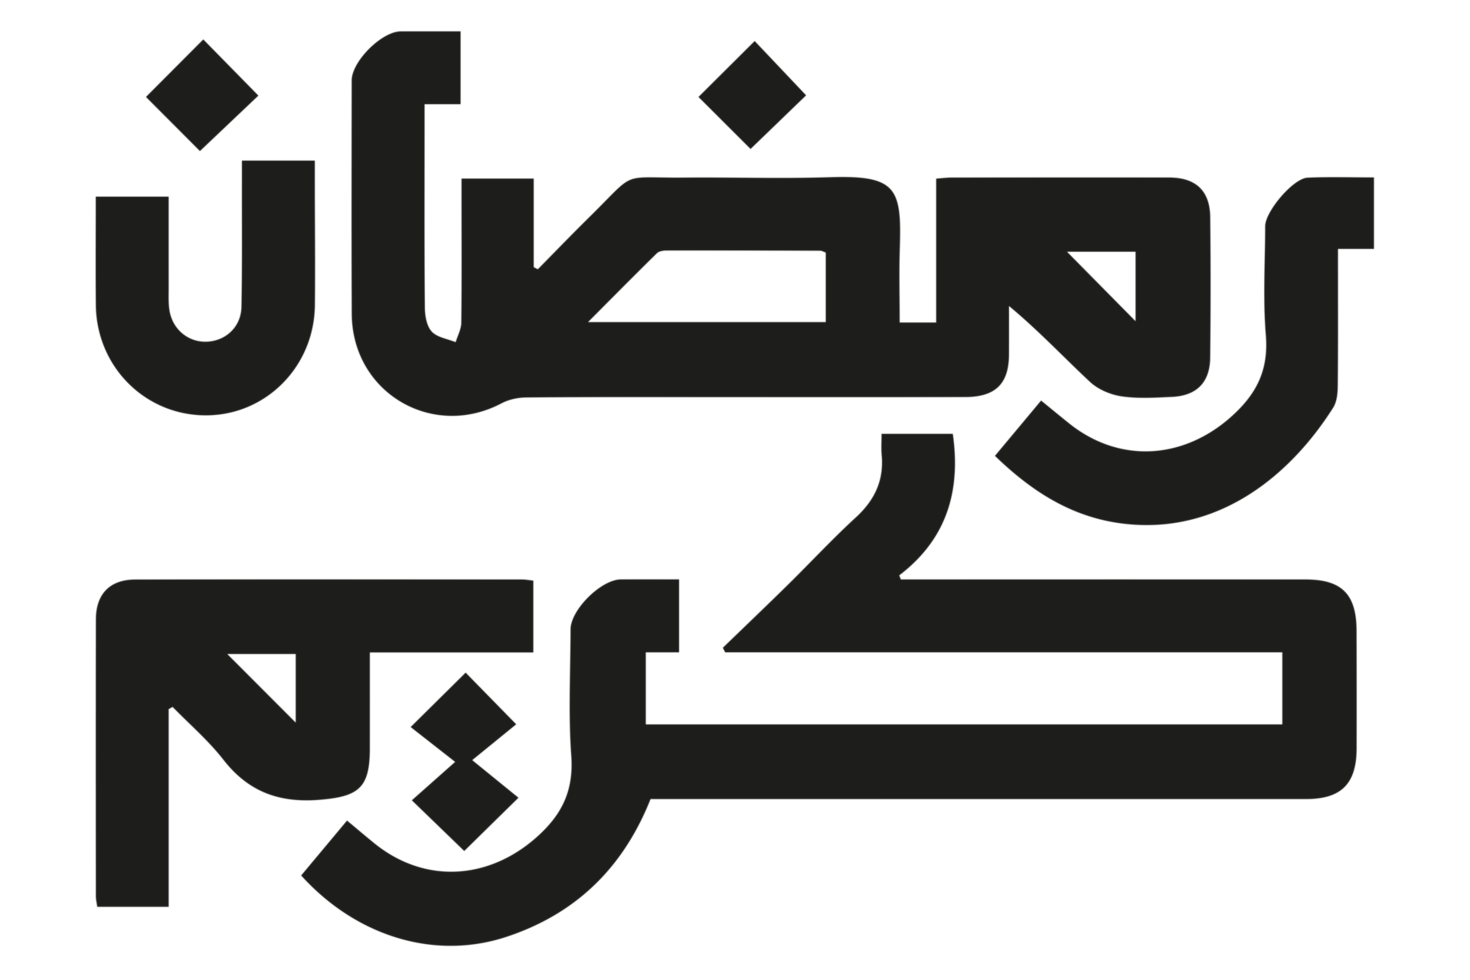 ramadan kareem - texto ramadan - caligrafía ramzan sobre fondo transparente png